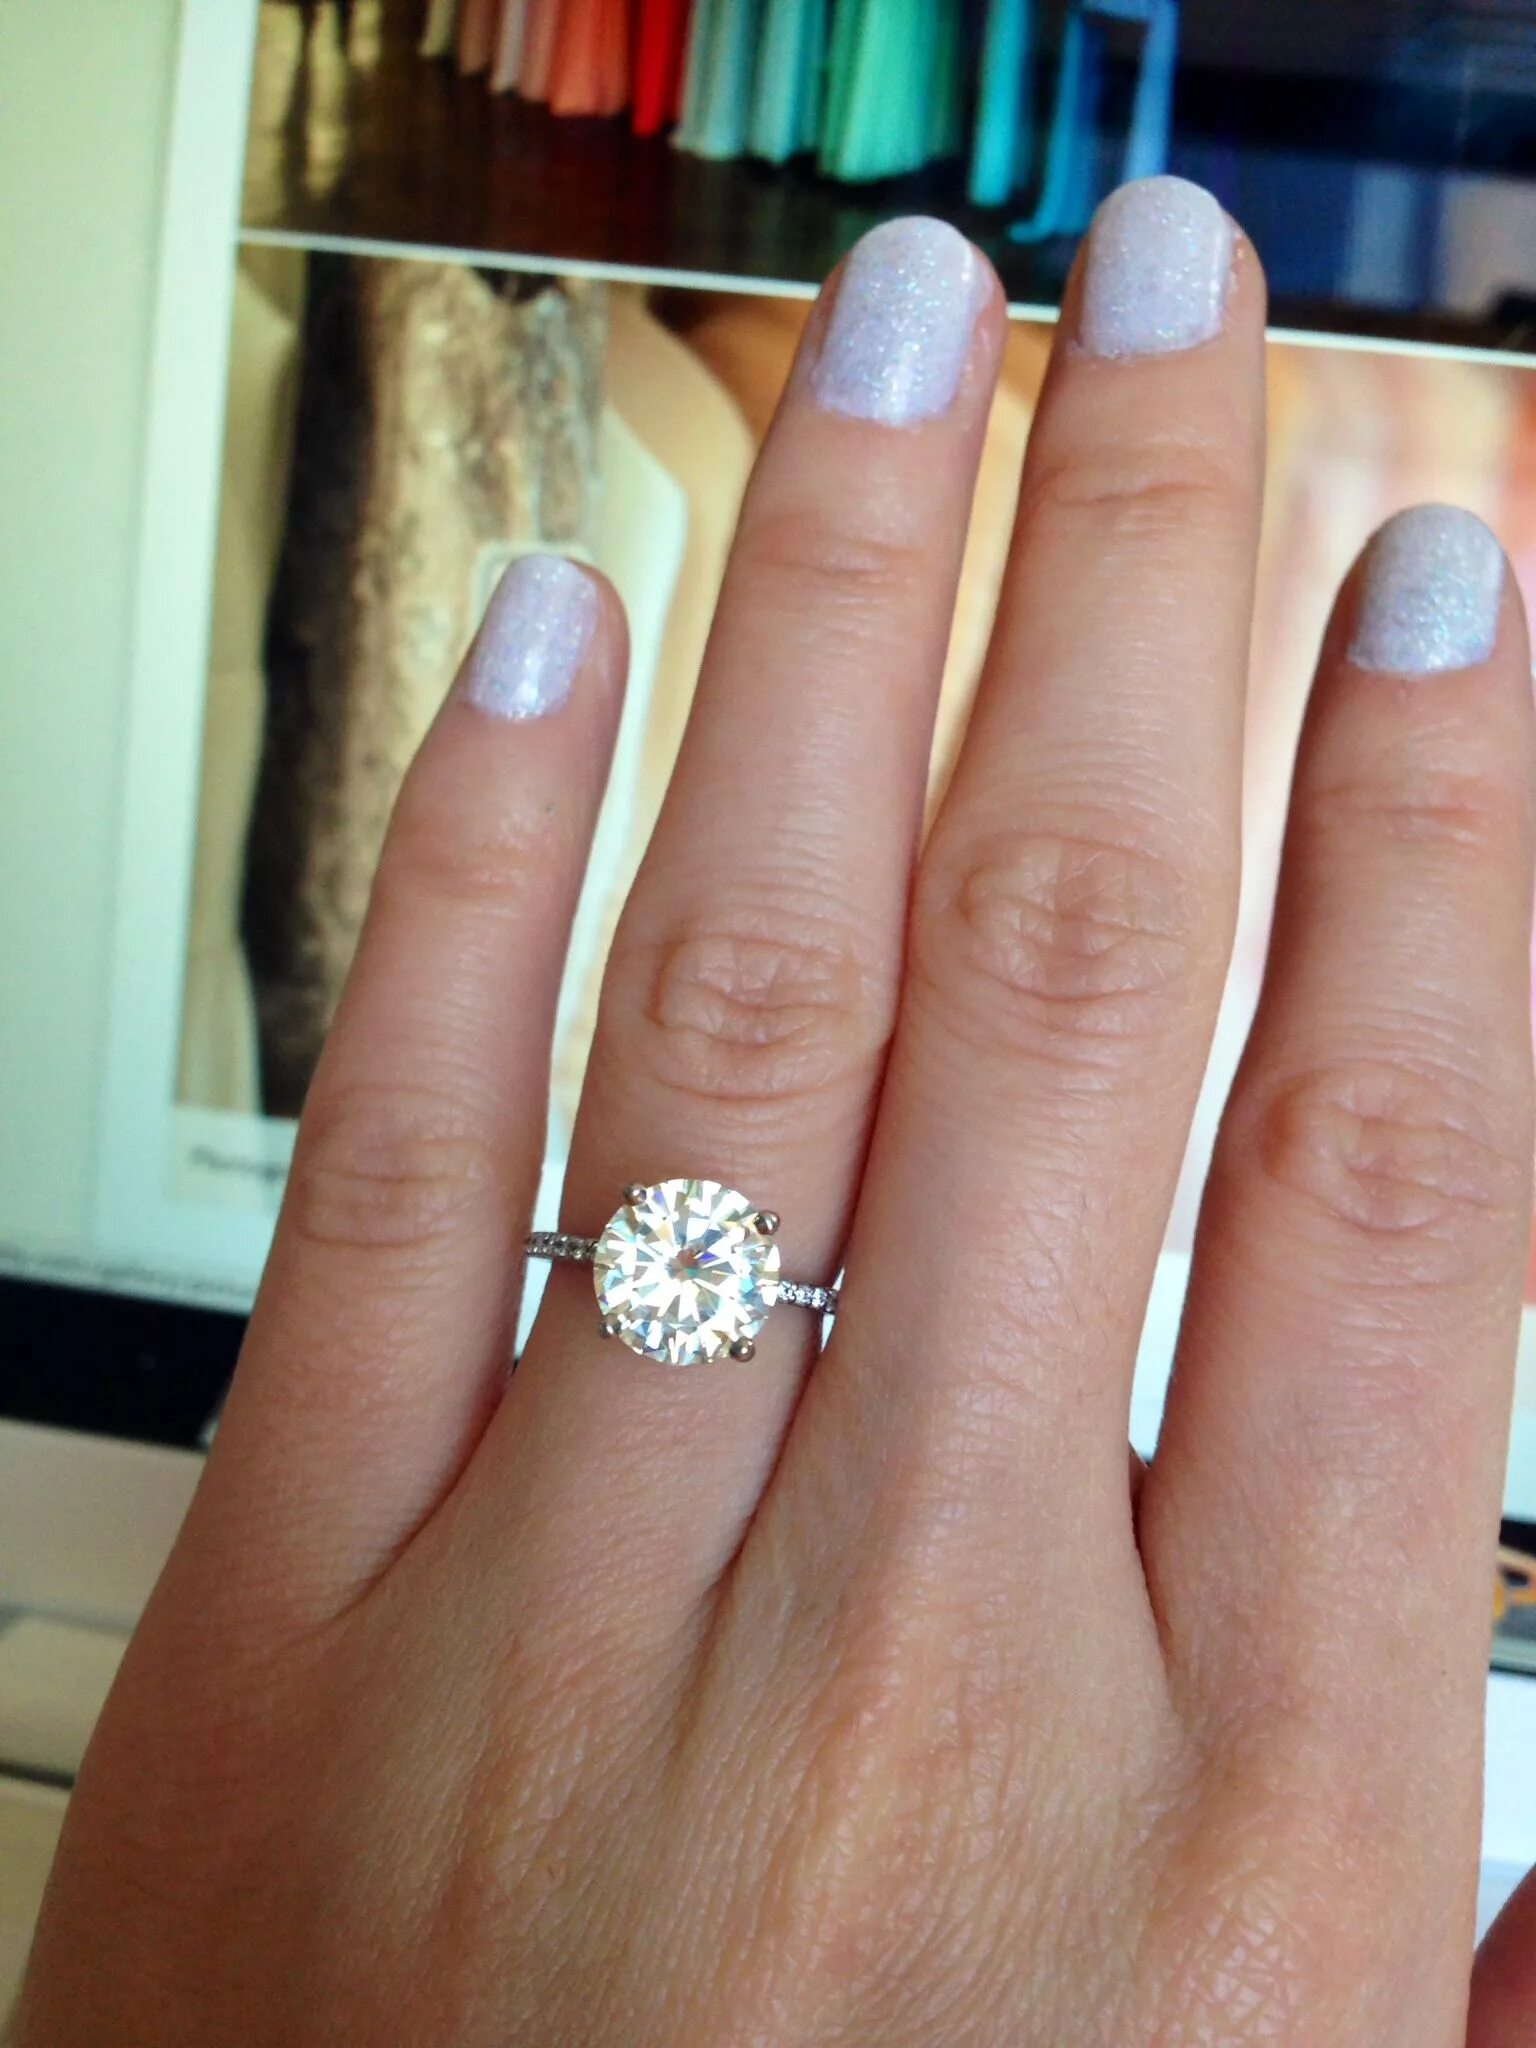 5 карат. Кольцо 5 карат. Обручальное кольцо кольцо 5 карат. Radiant Solitaire 5 Carat Diamond Ring. 2 5 Carat Diamond Ring.